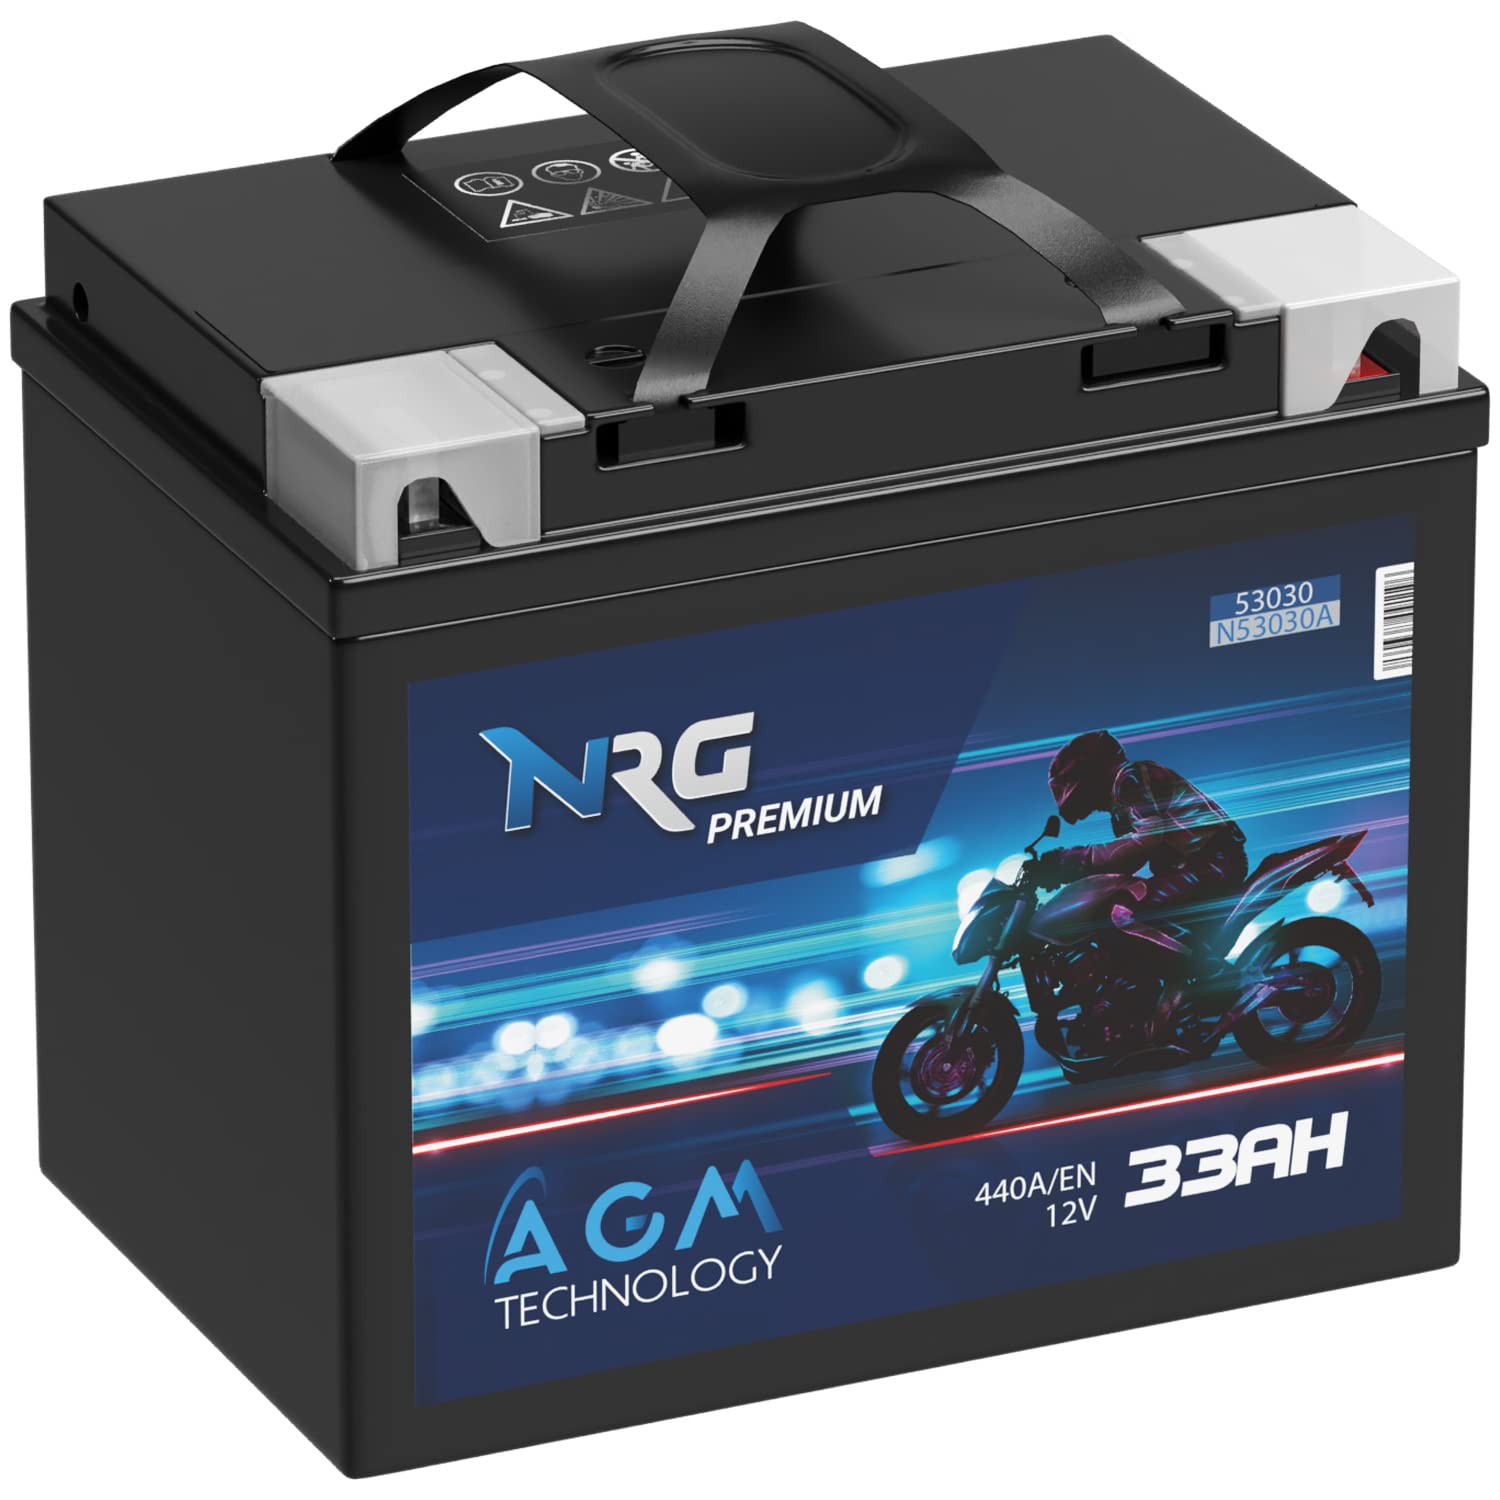 NRG Premium Y60-N30L-A AGM Motorradbatterie 33Ah 12V 440A/EN Batterie 53030 auslaufsicher wartungsfrei ersetzt 28Ah 30Ah 32Ah von NRG PREMIUM